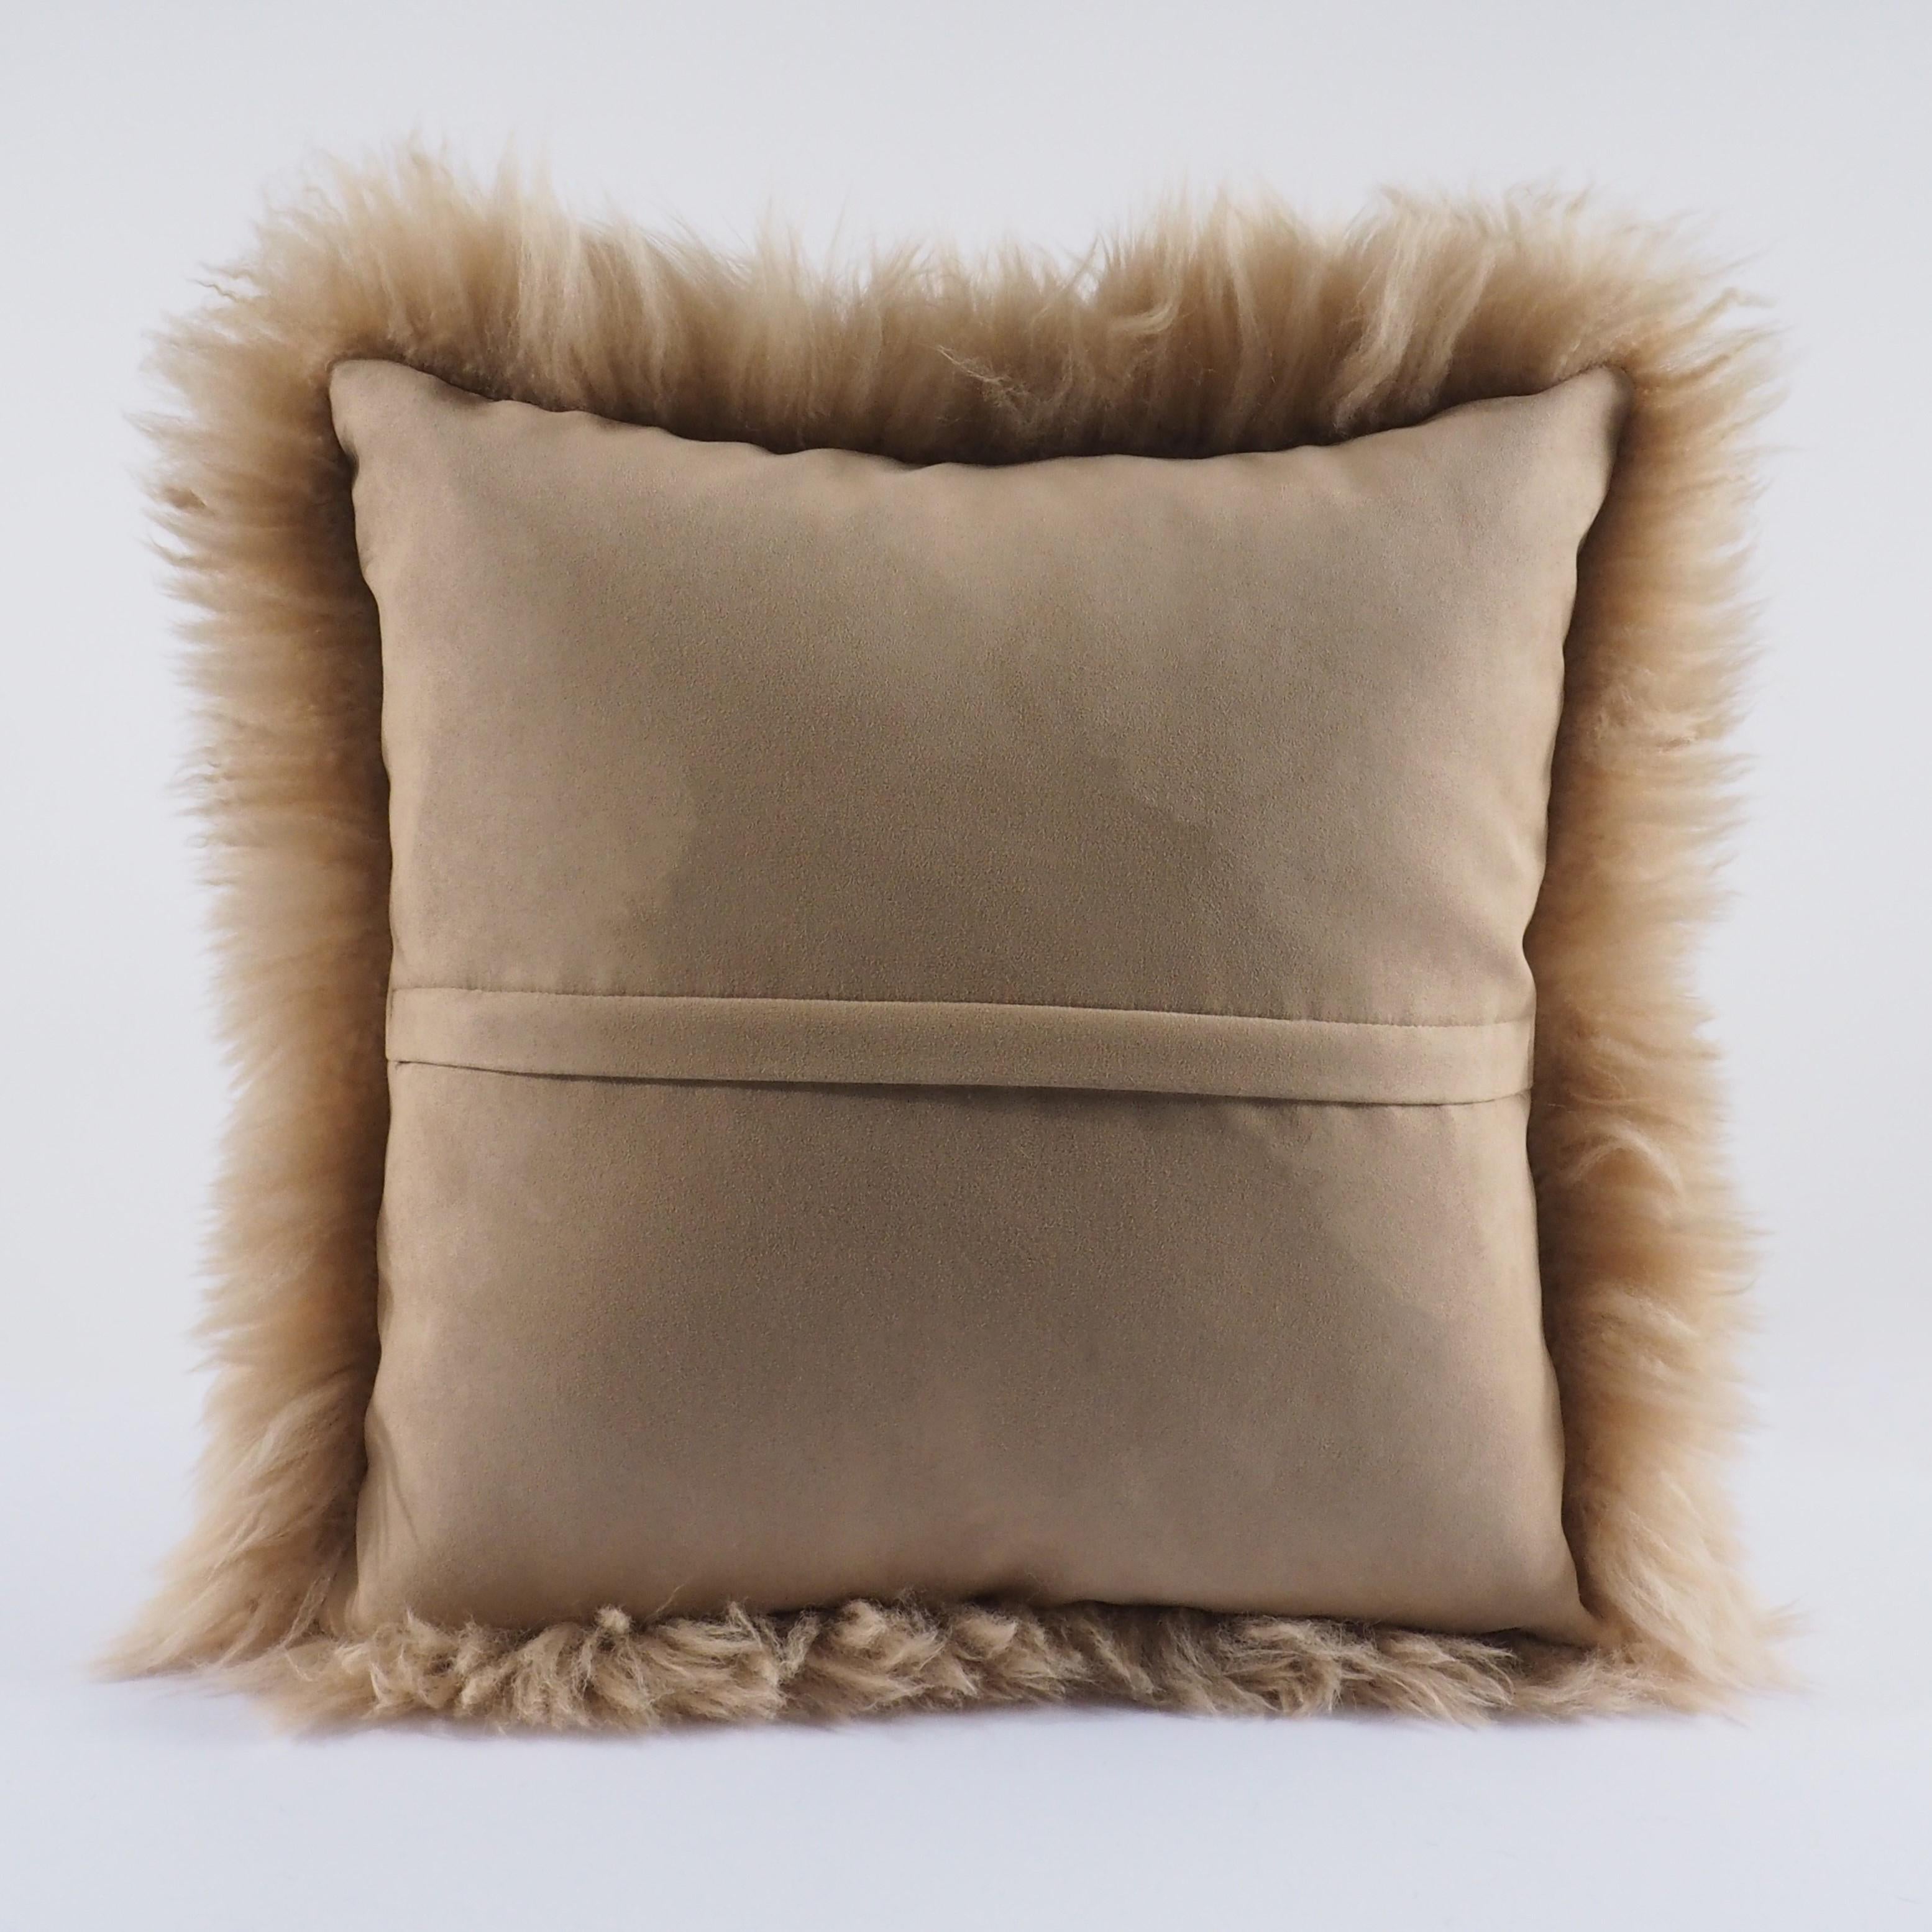 Italian Camel Light Ollengo Shearling Sheepskin Pillow Fluffy Cushion by Muchi Decor For Sale